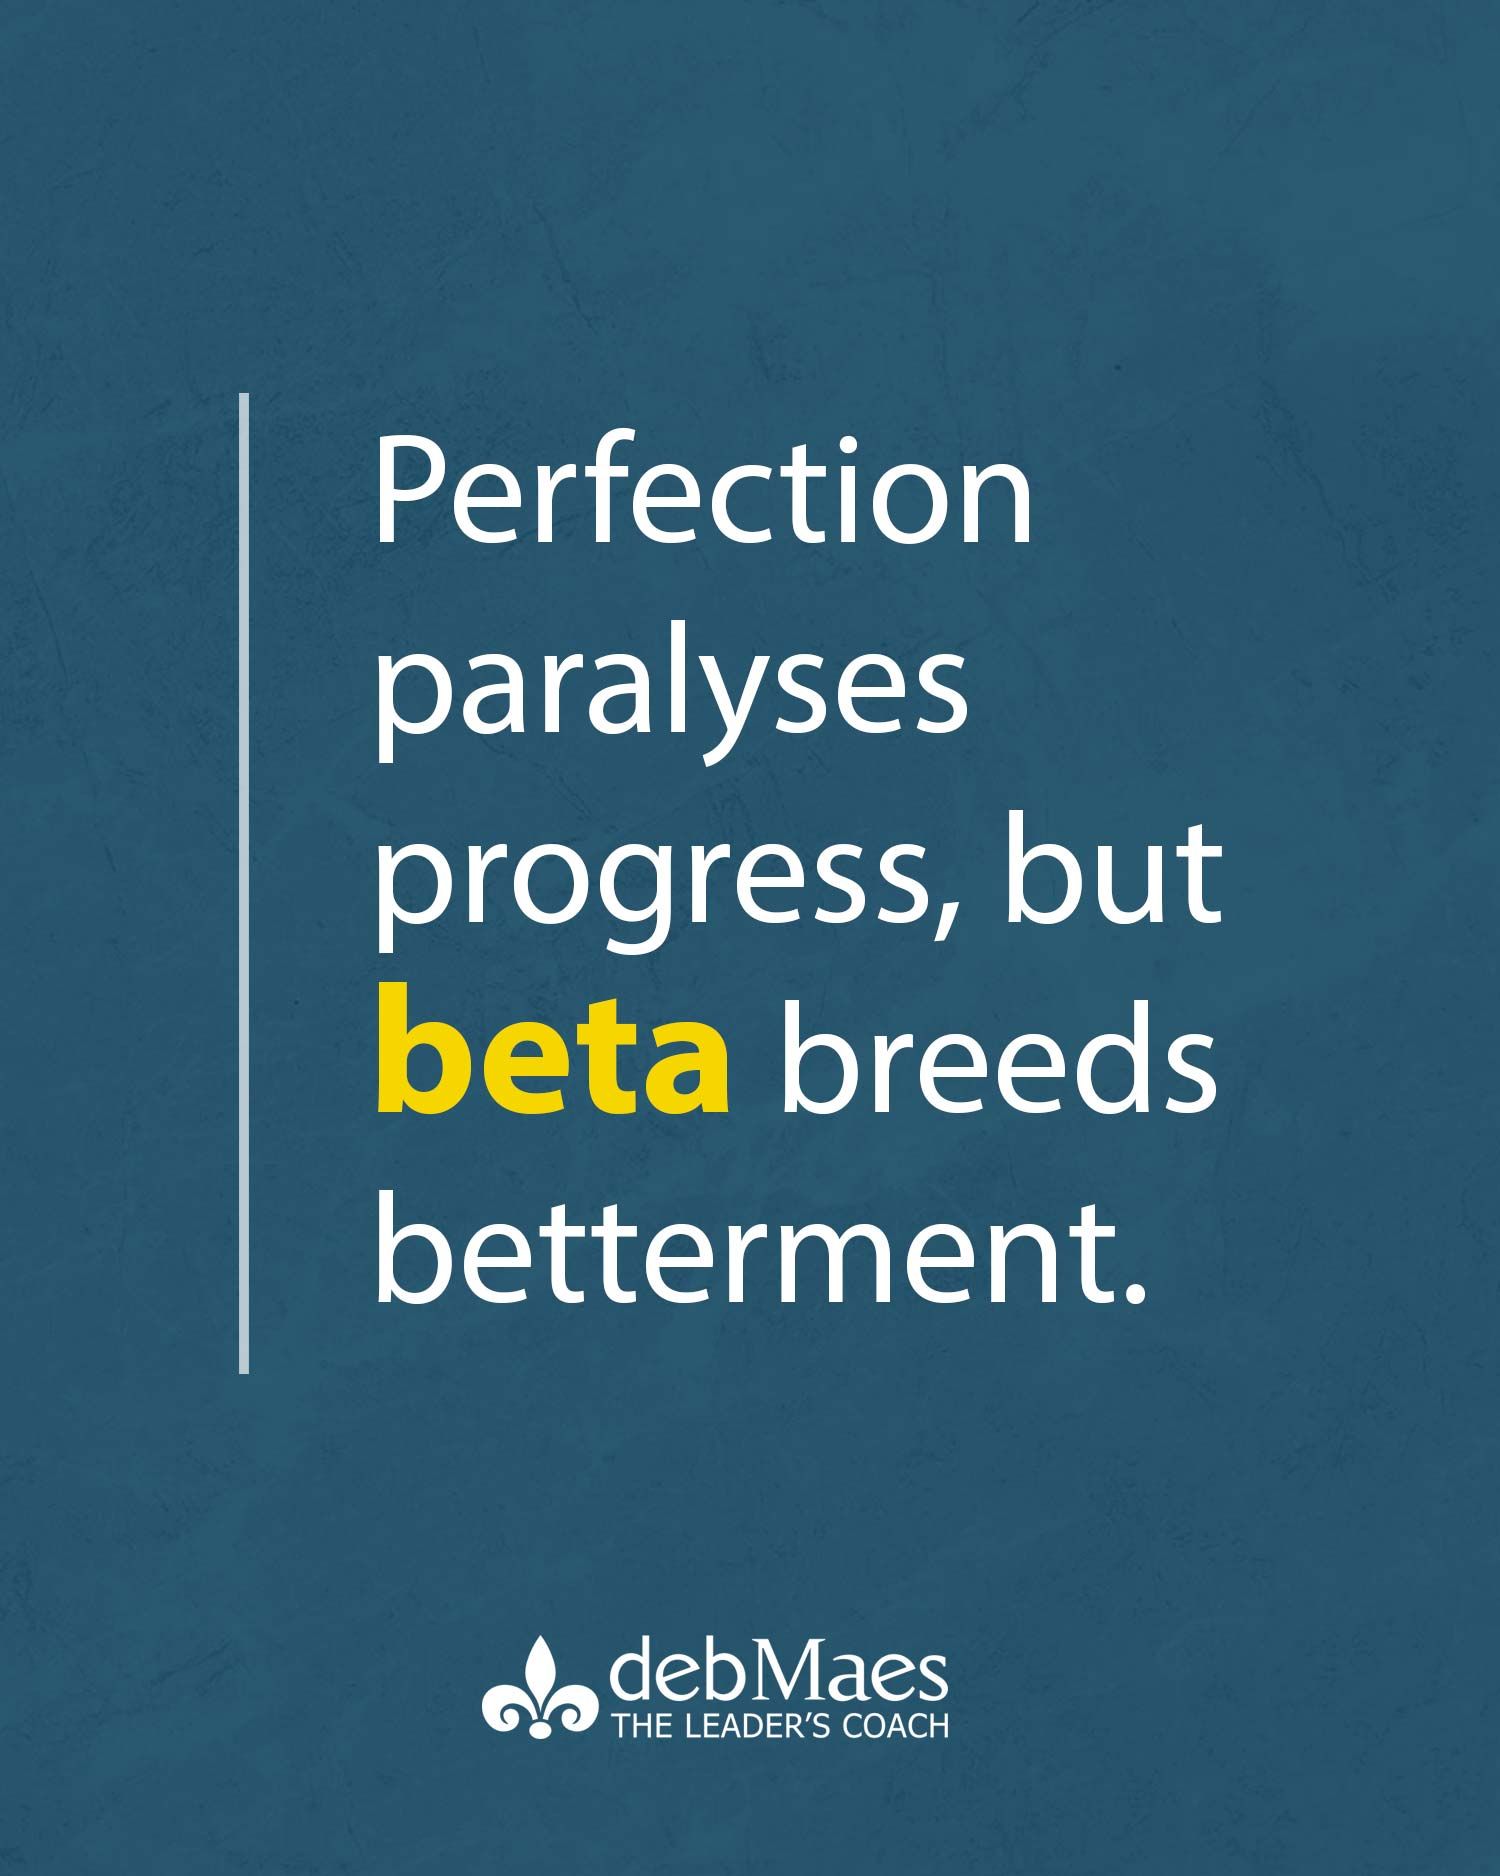 Perfection paralyses progress but beta breeds betterment